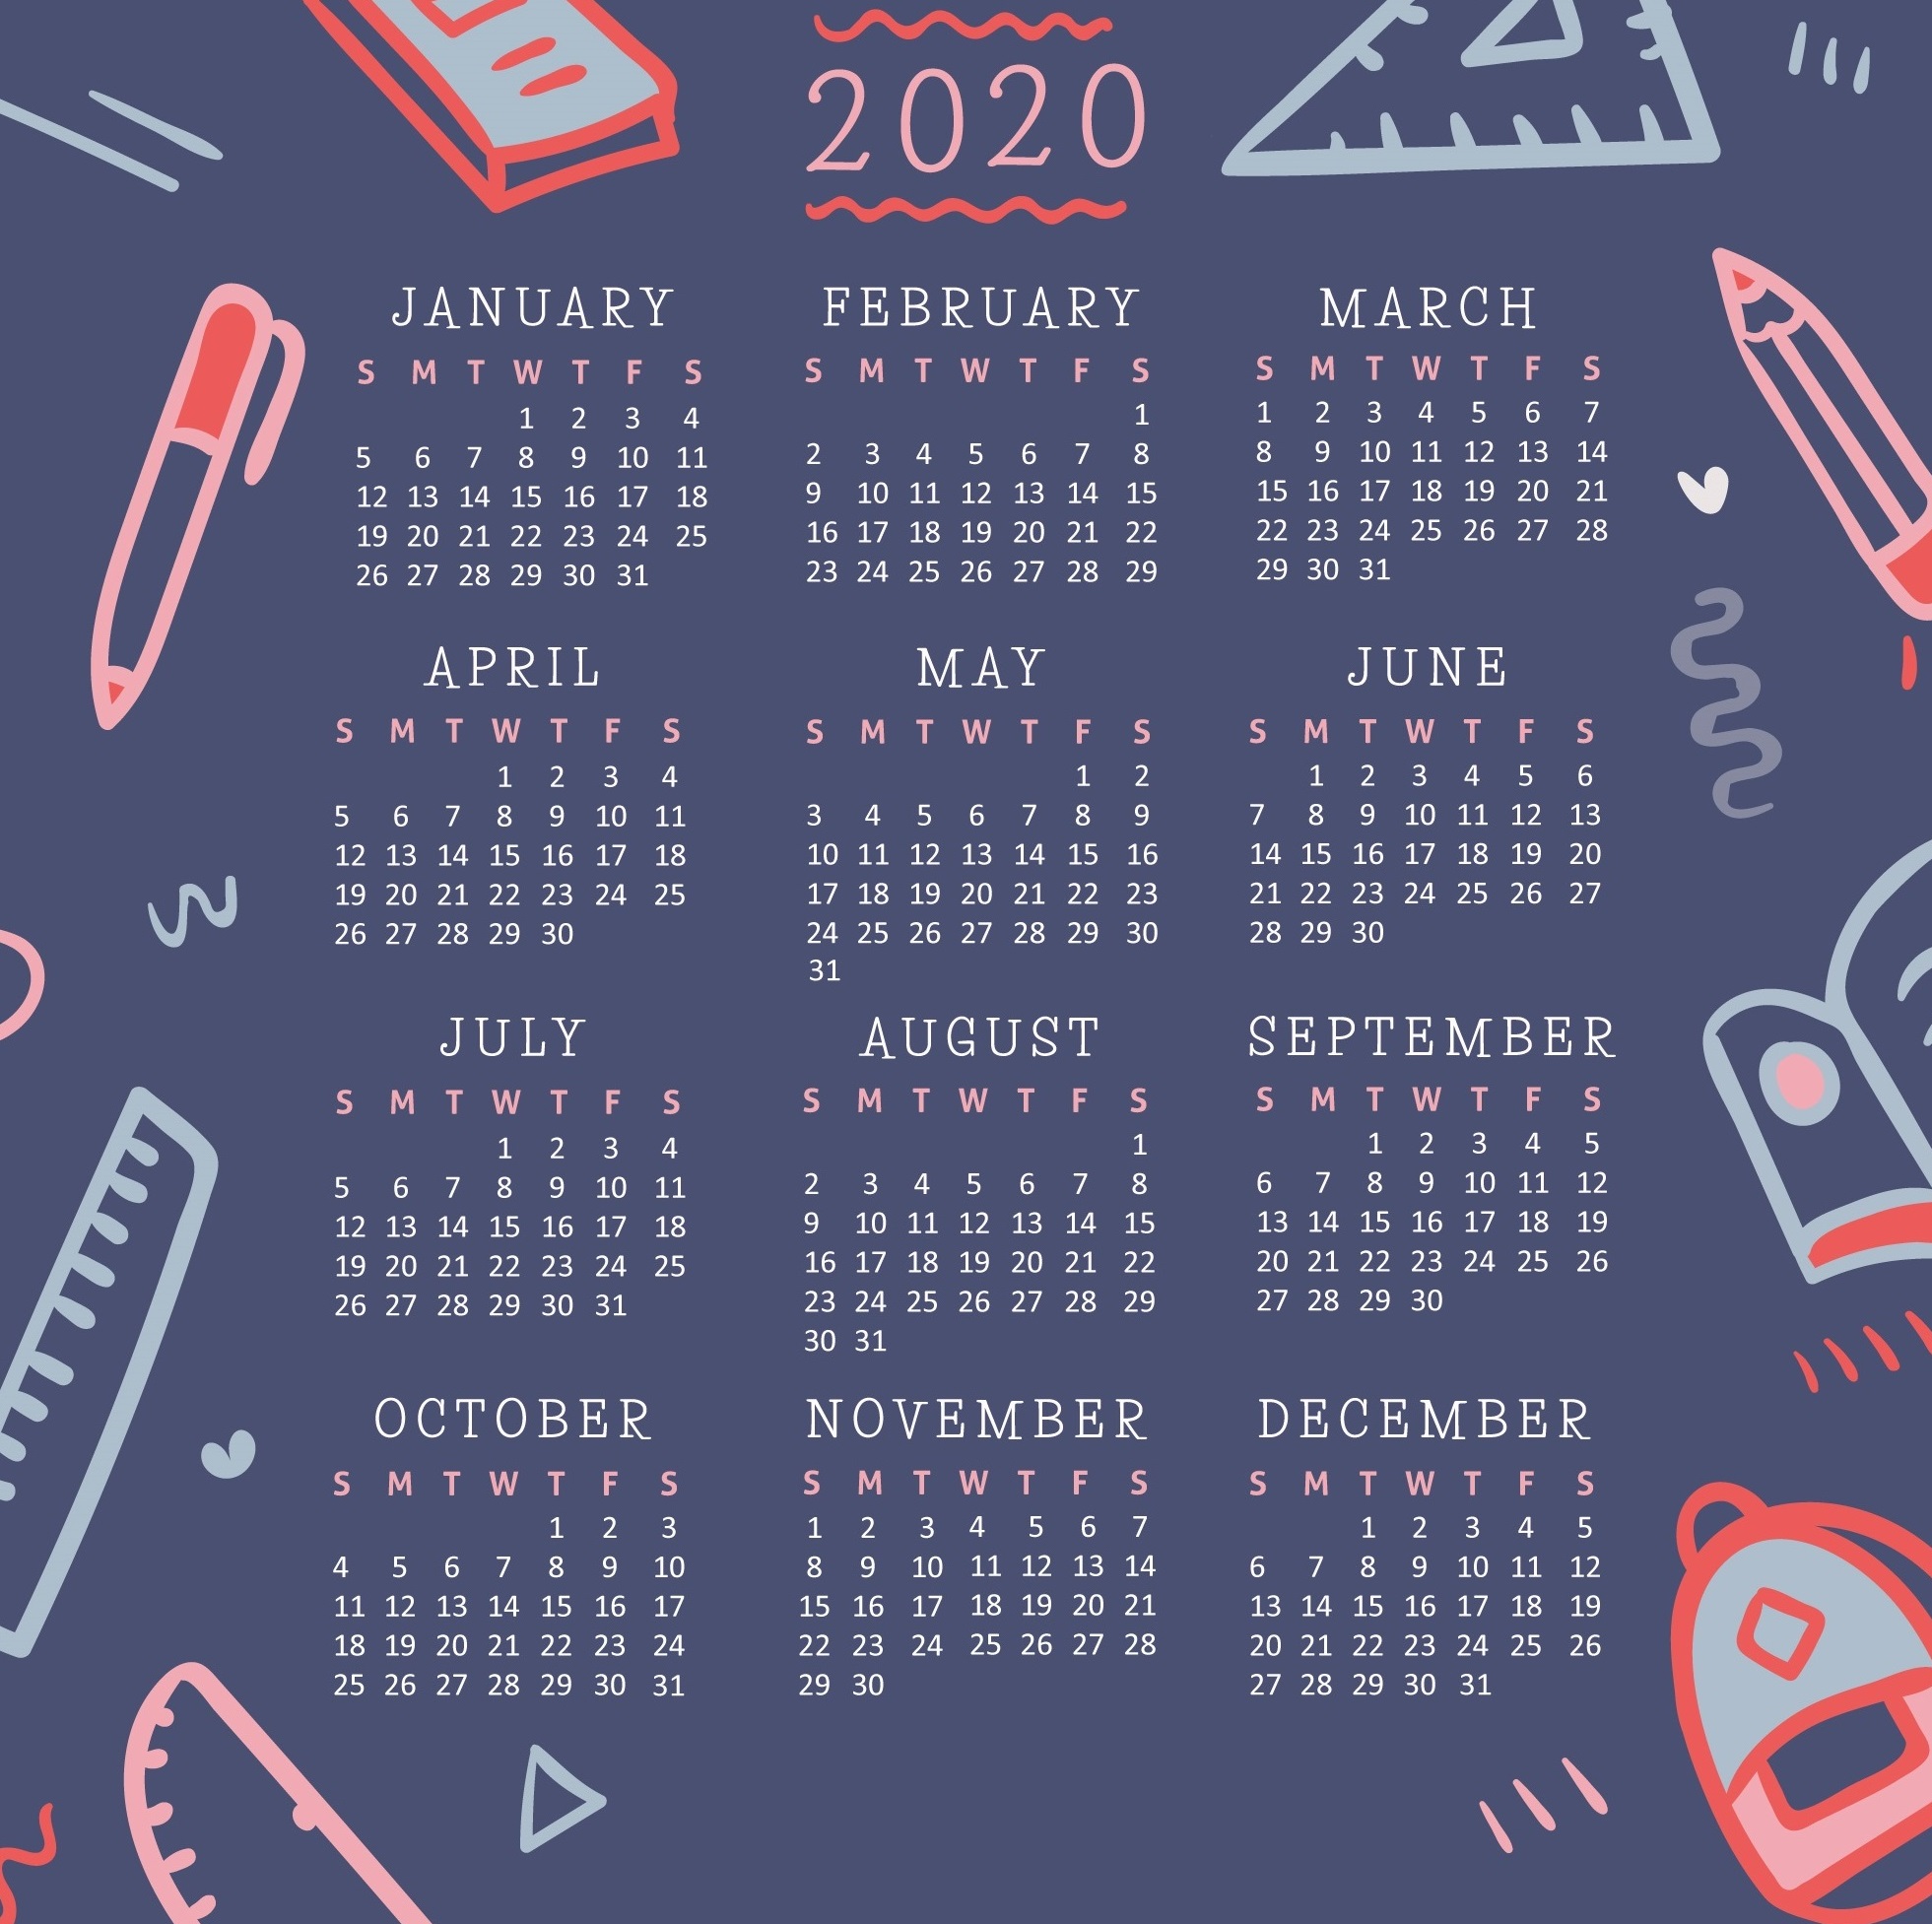 2020 Calendar Phone Wallpapers on